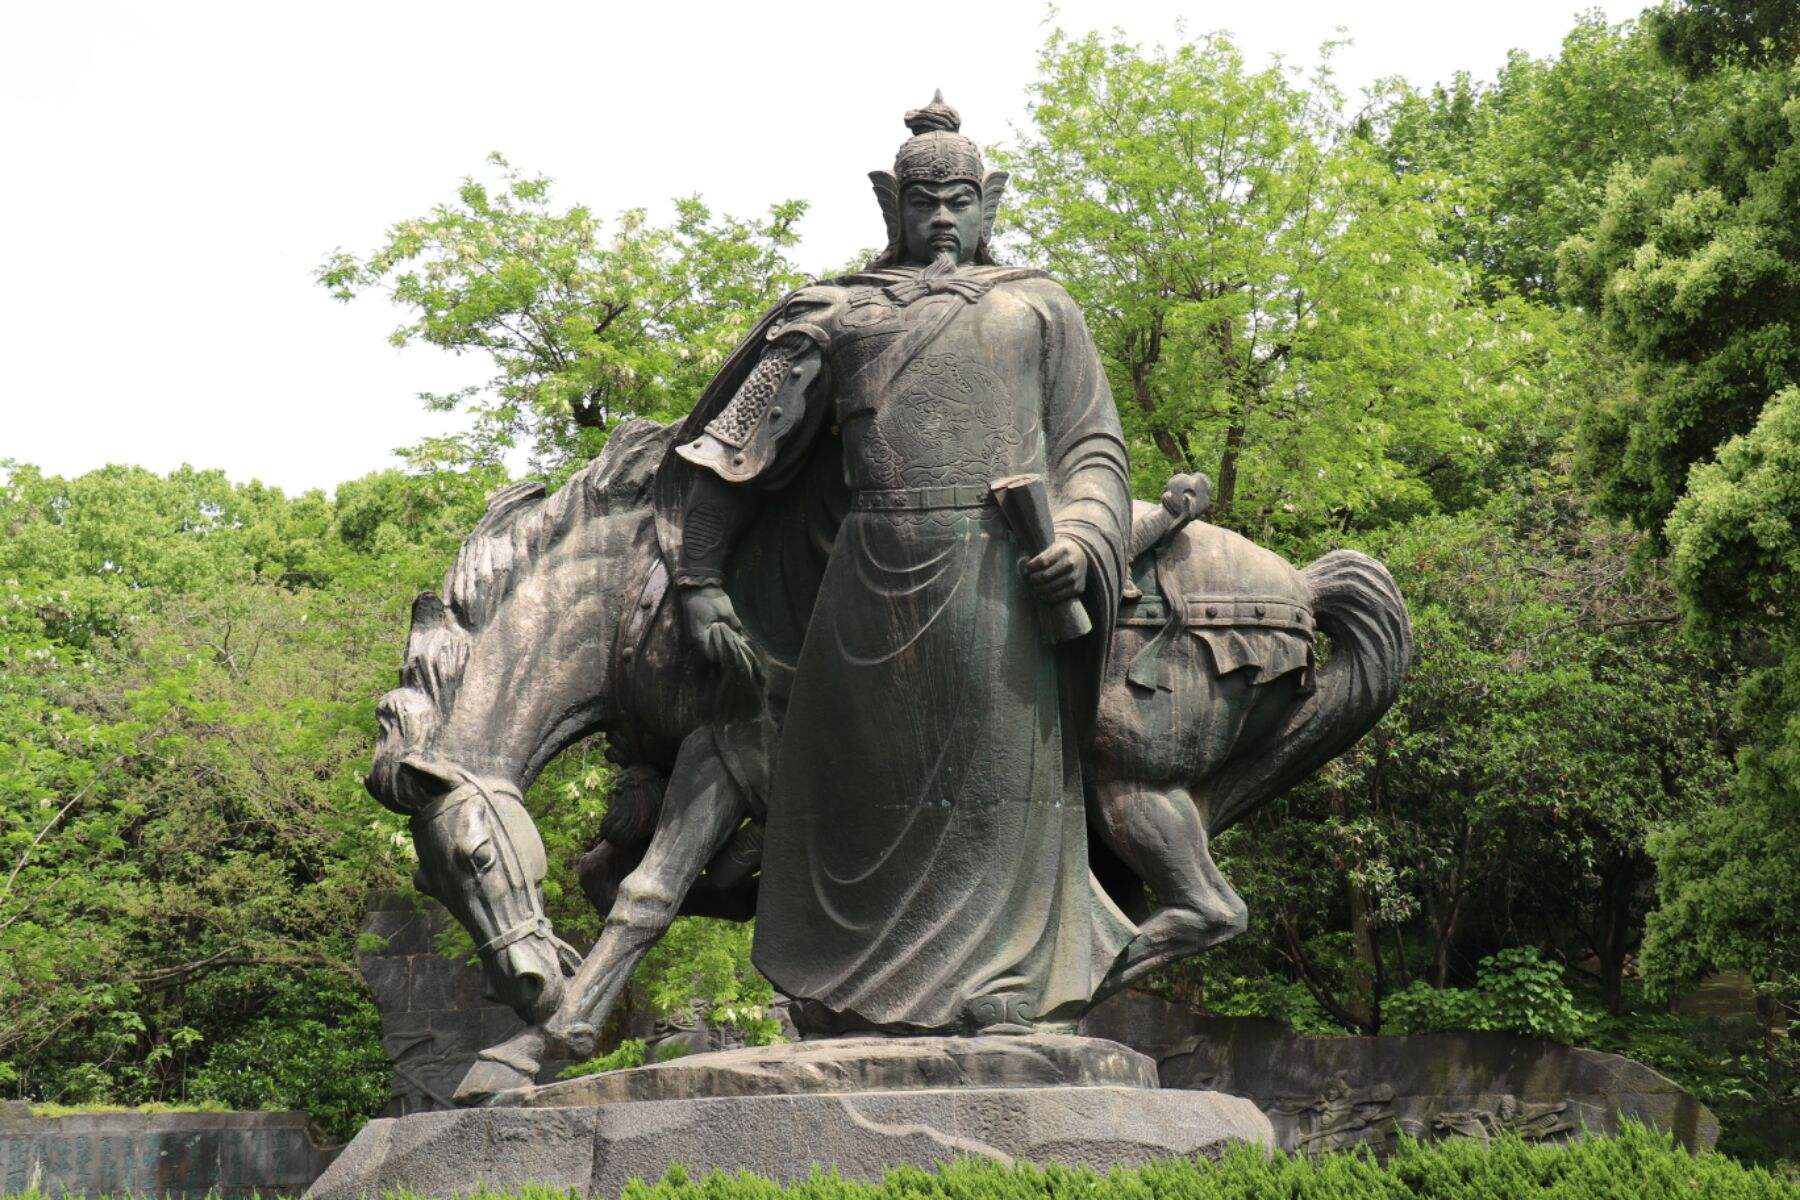 Yue Fei's statue 岳飞塑像